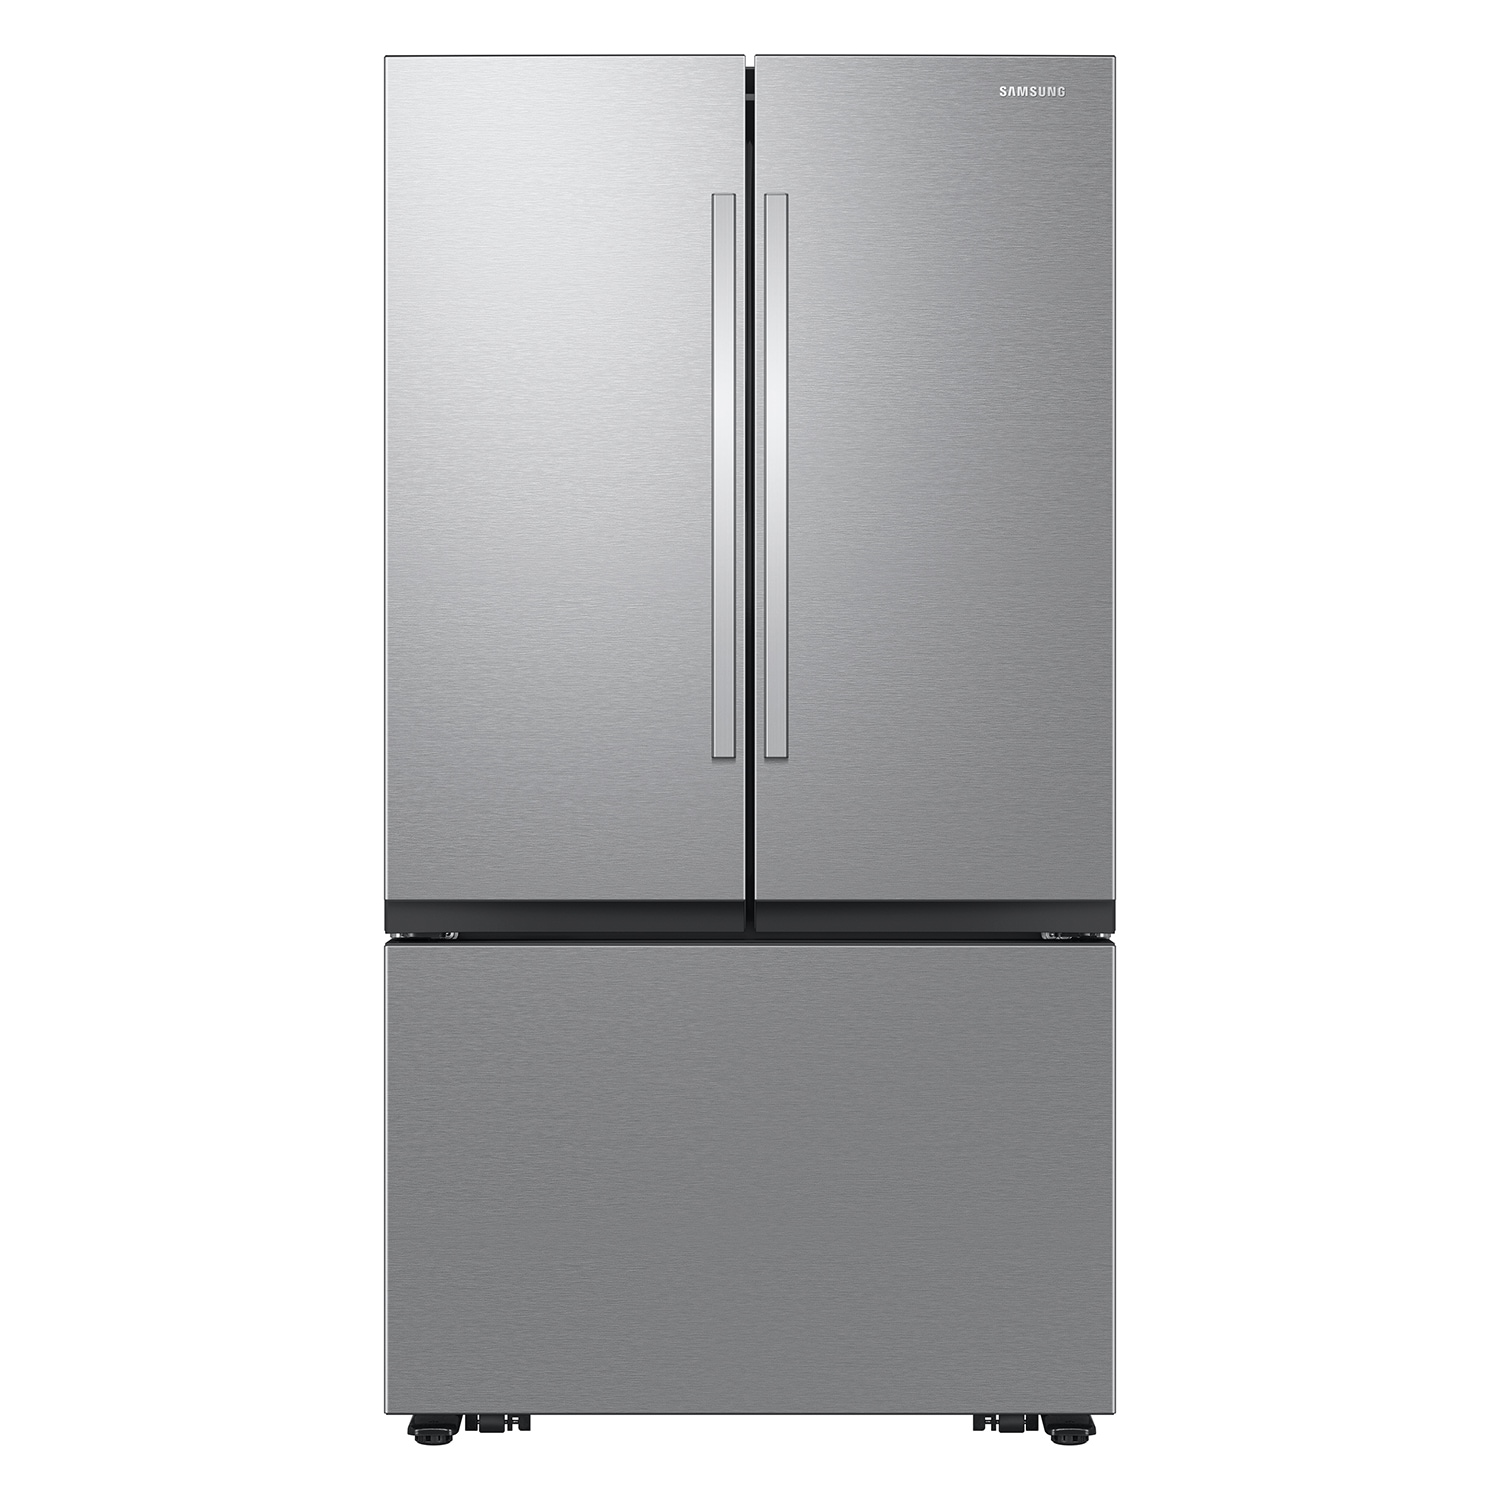 Samsung Mega Capacity 31.5-cu ft Smart French Door Refrigerator with Dual Ice Maker (Fingerprint Resistant Stainless Steel) Energy Star